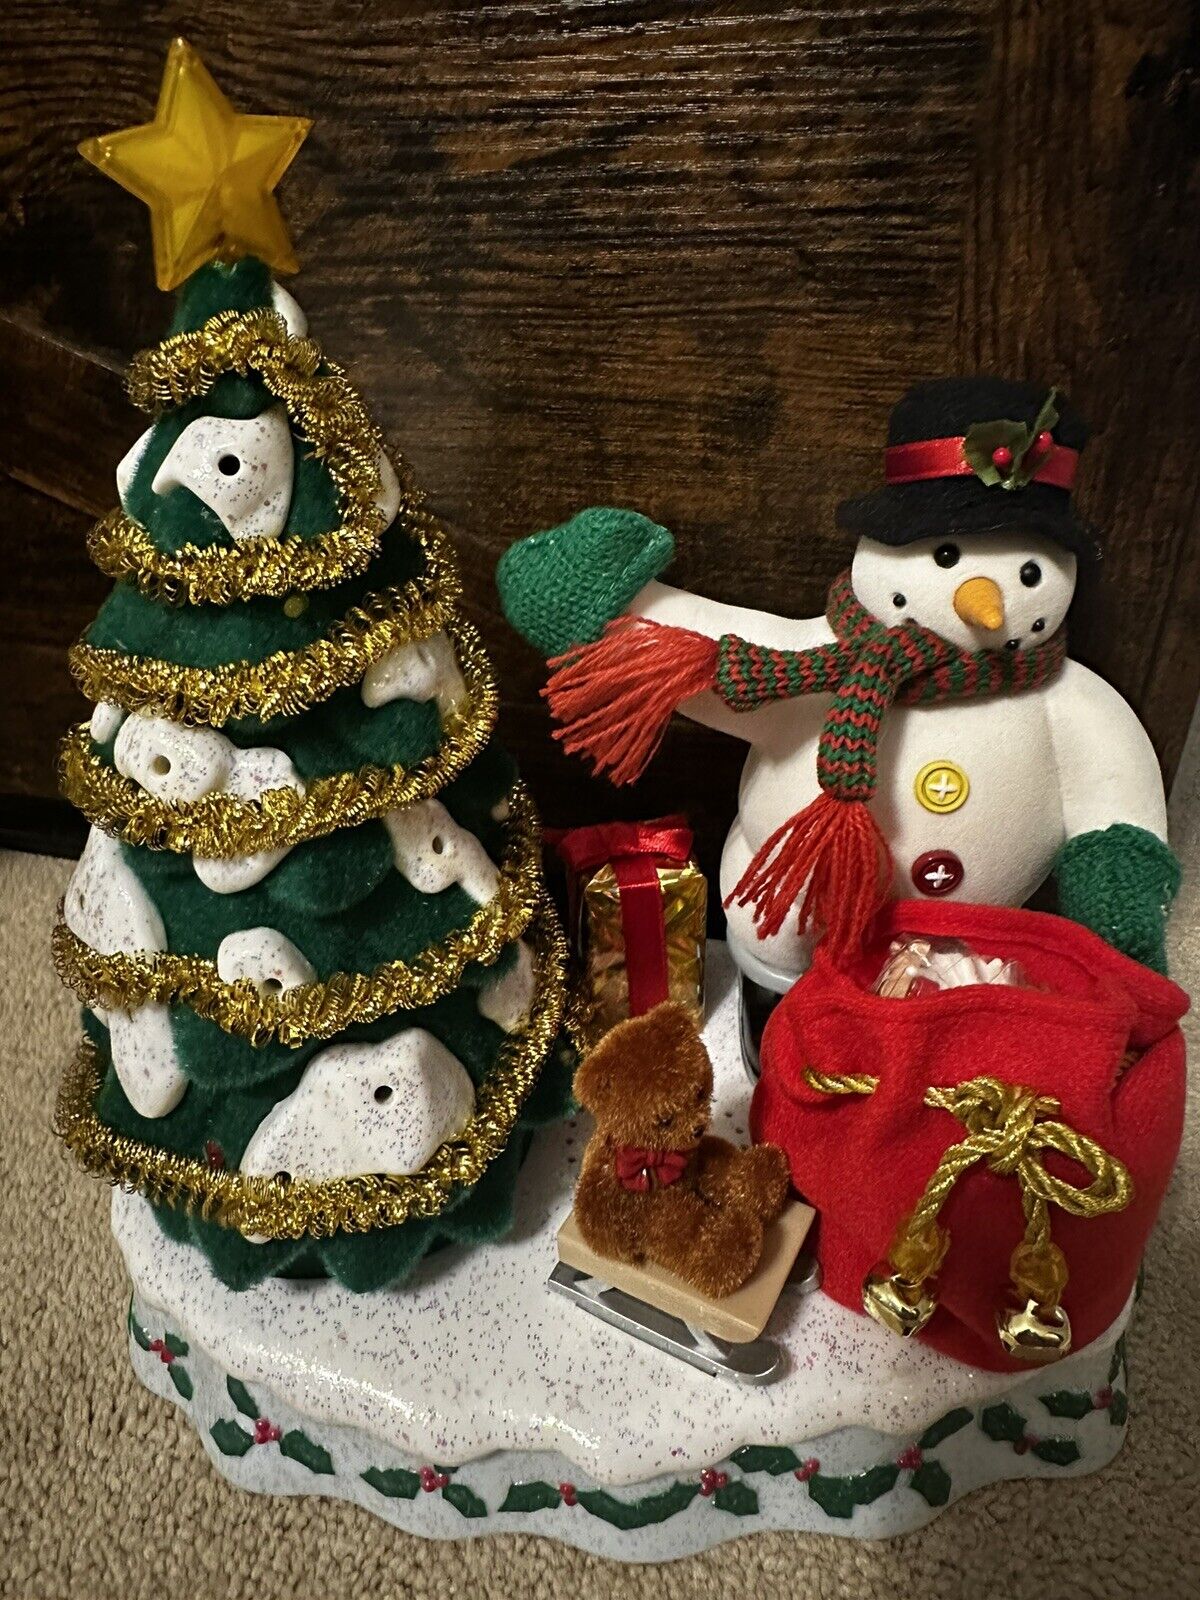 A Wonderful Countdown to Christmas Talking Snowman Advent Tree w/Ornaments Avon